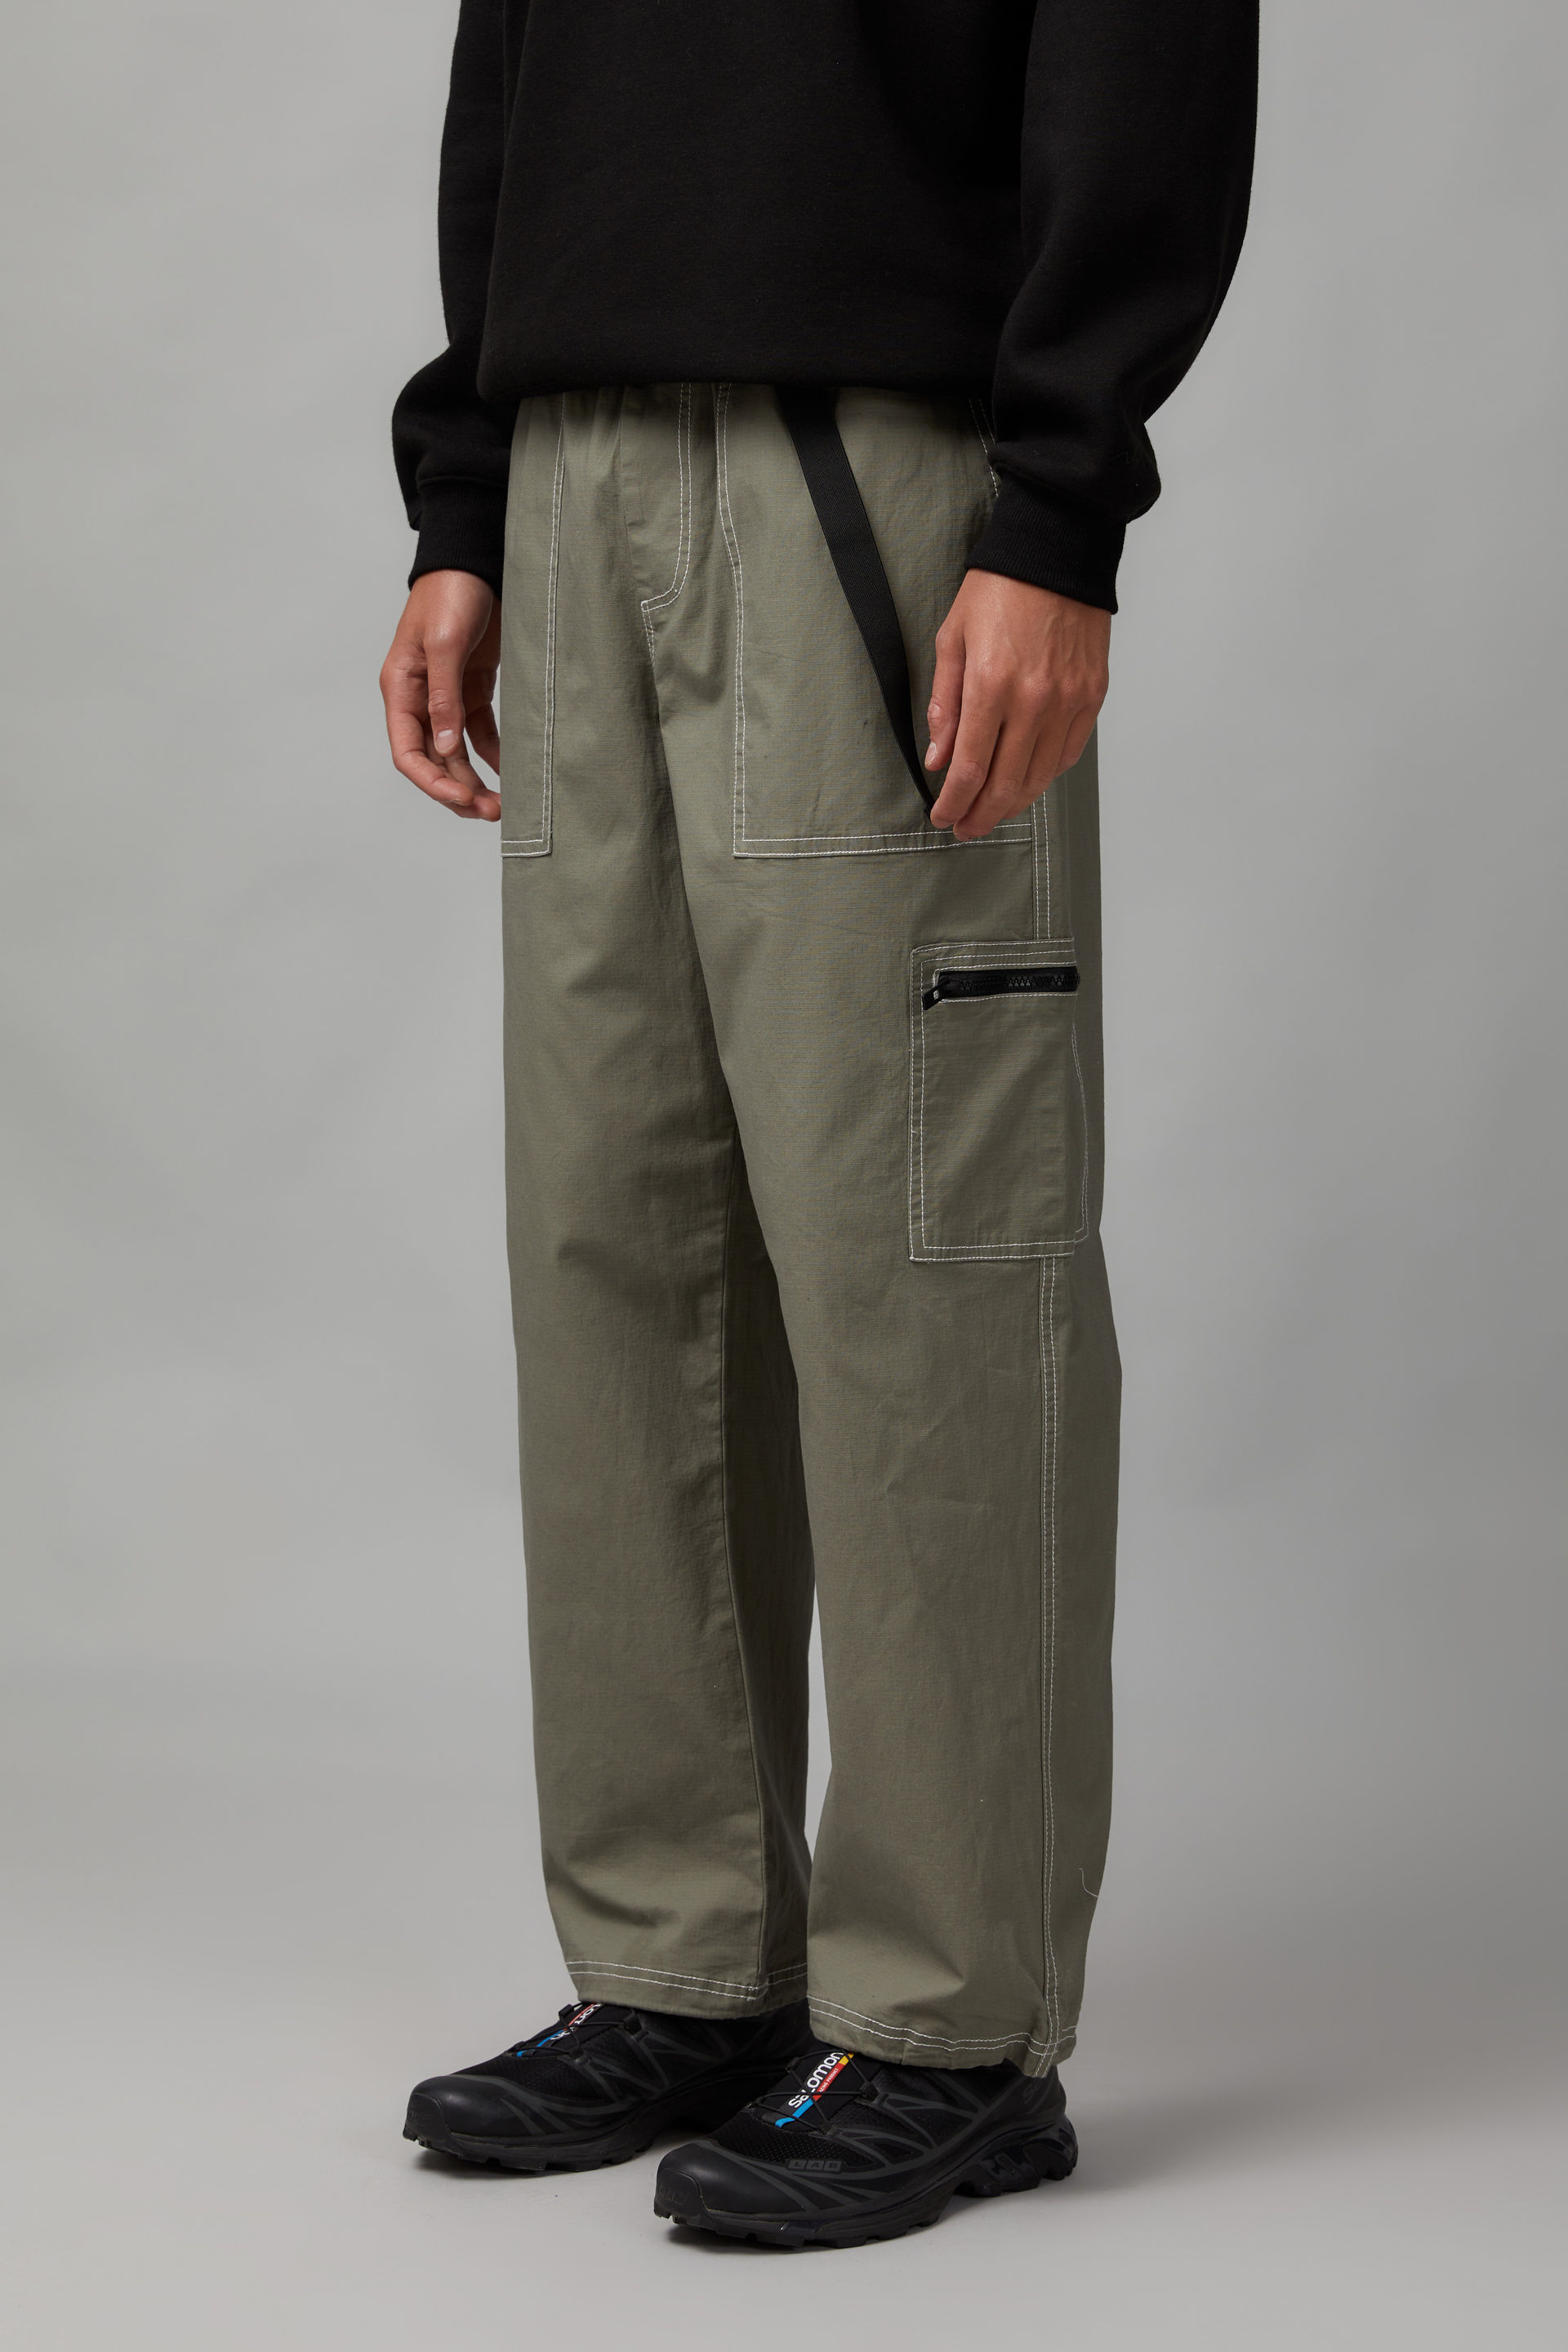 Threadbare Petite paneled sweatpants in gray - ShopStyle Pants